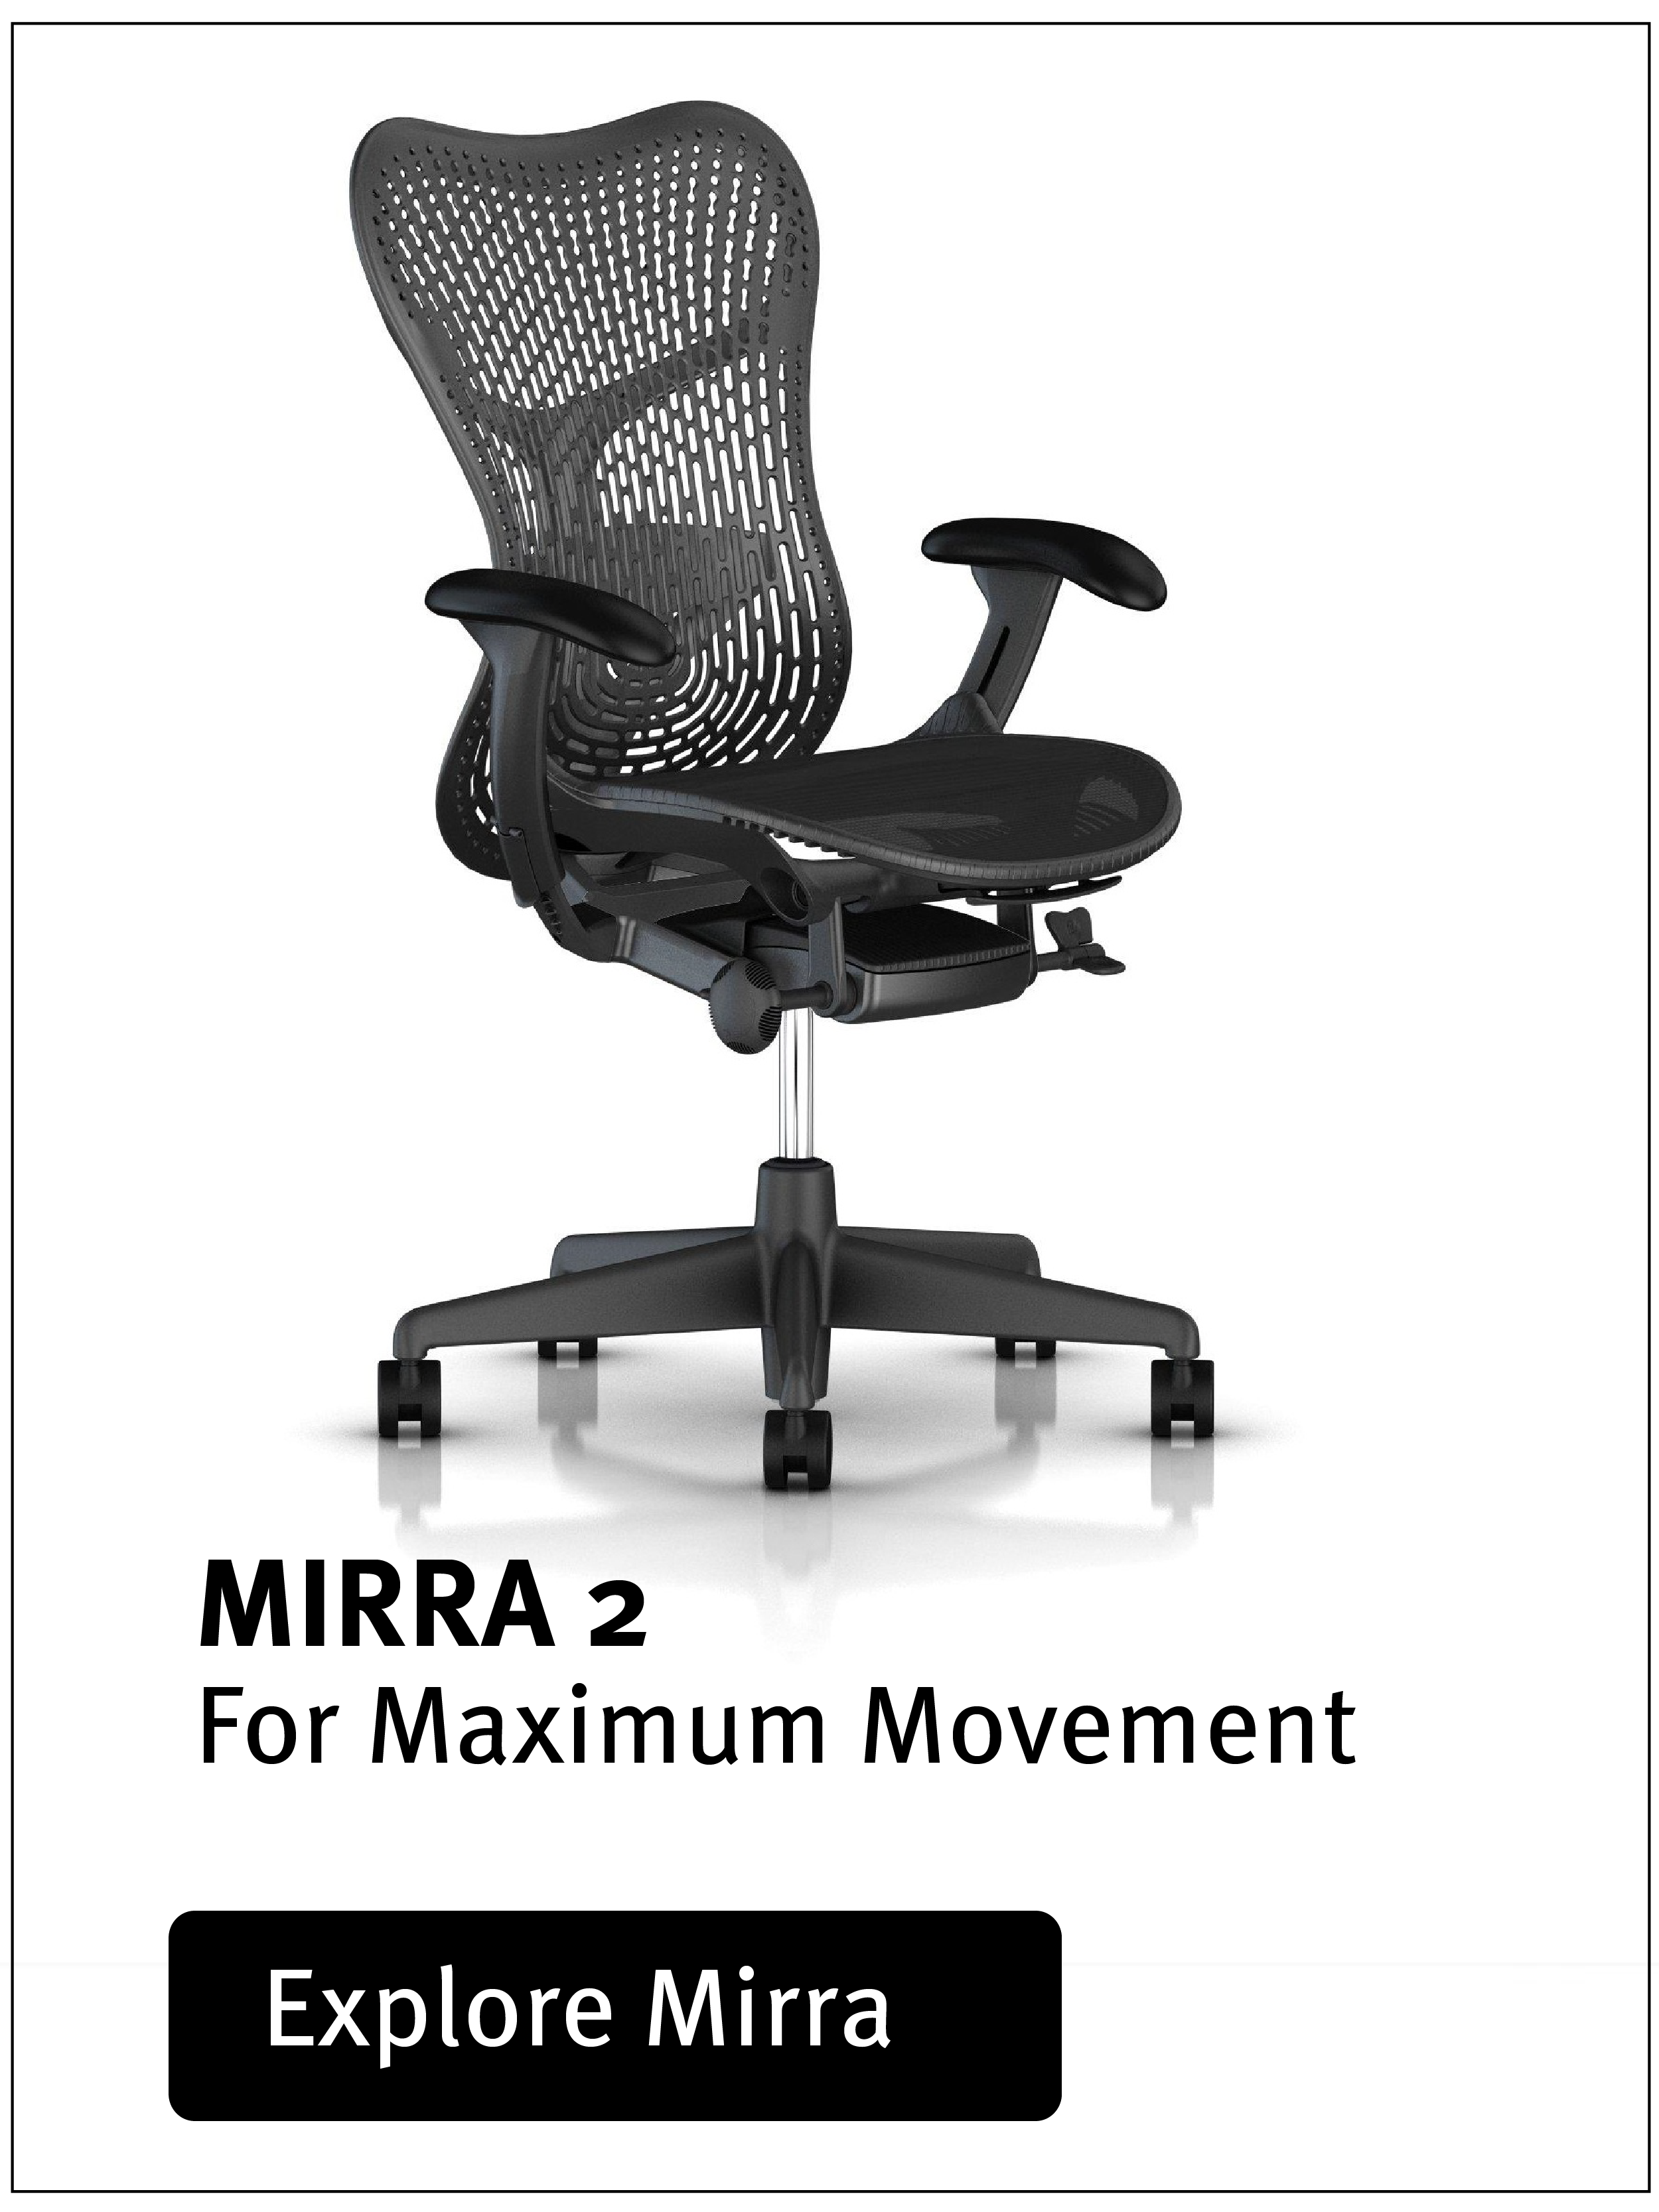 Mirra 2 chair adjustment video